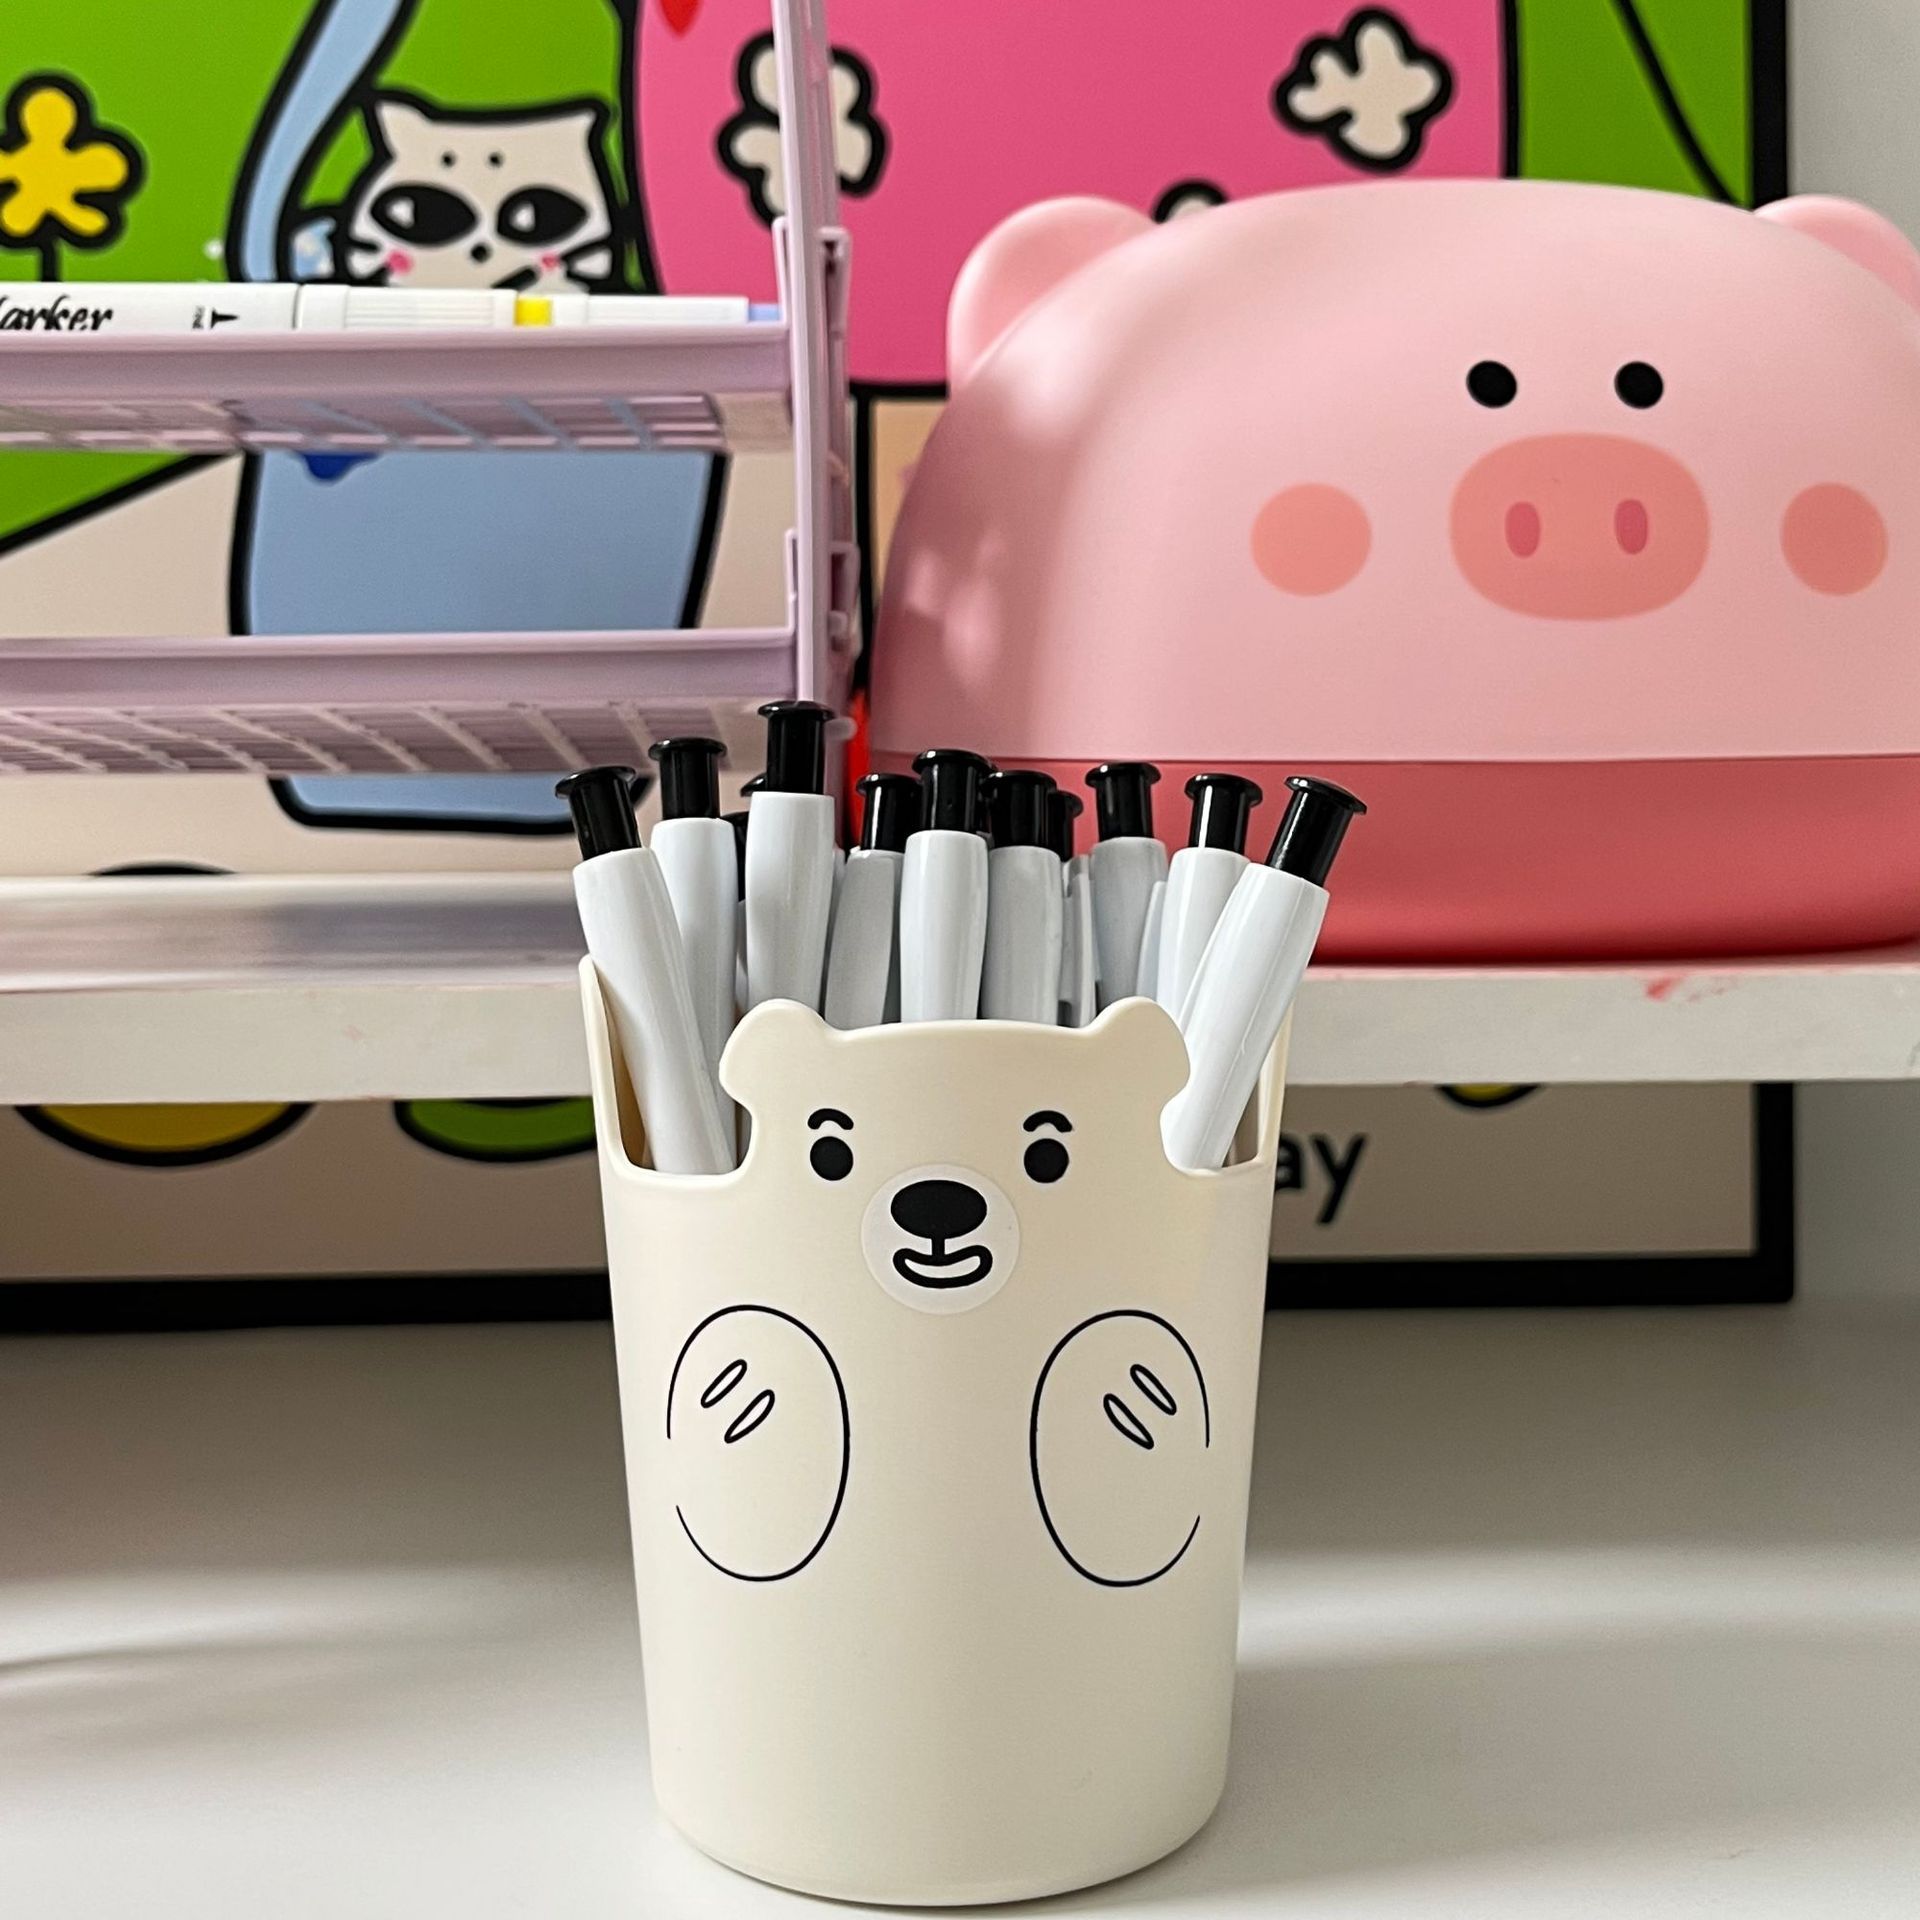 Adorable Bear Pen Holder - Multi-functional Desk Organizer For Office, Makeup, And Art Supplies